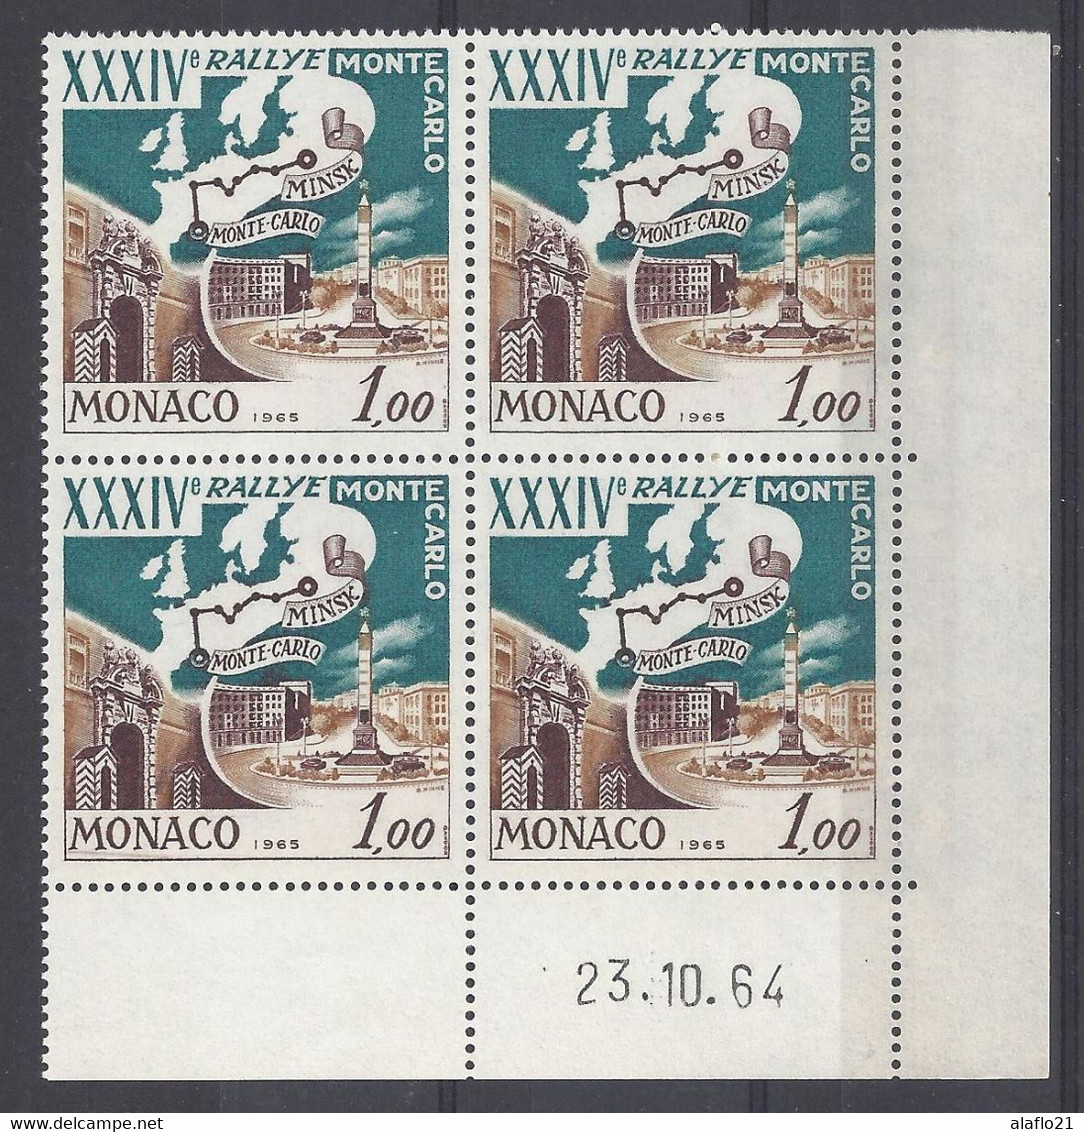 MONACO N° 662 - Bloc De 4 COIN DATE - NEUF SANS CHARNIERE - 23/10/64 - Unused Stamps